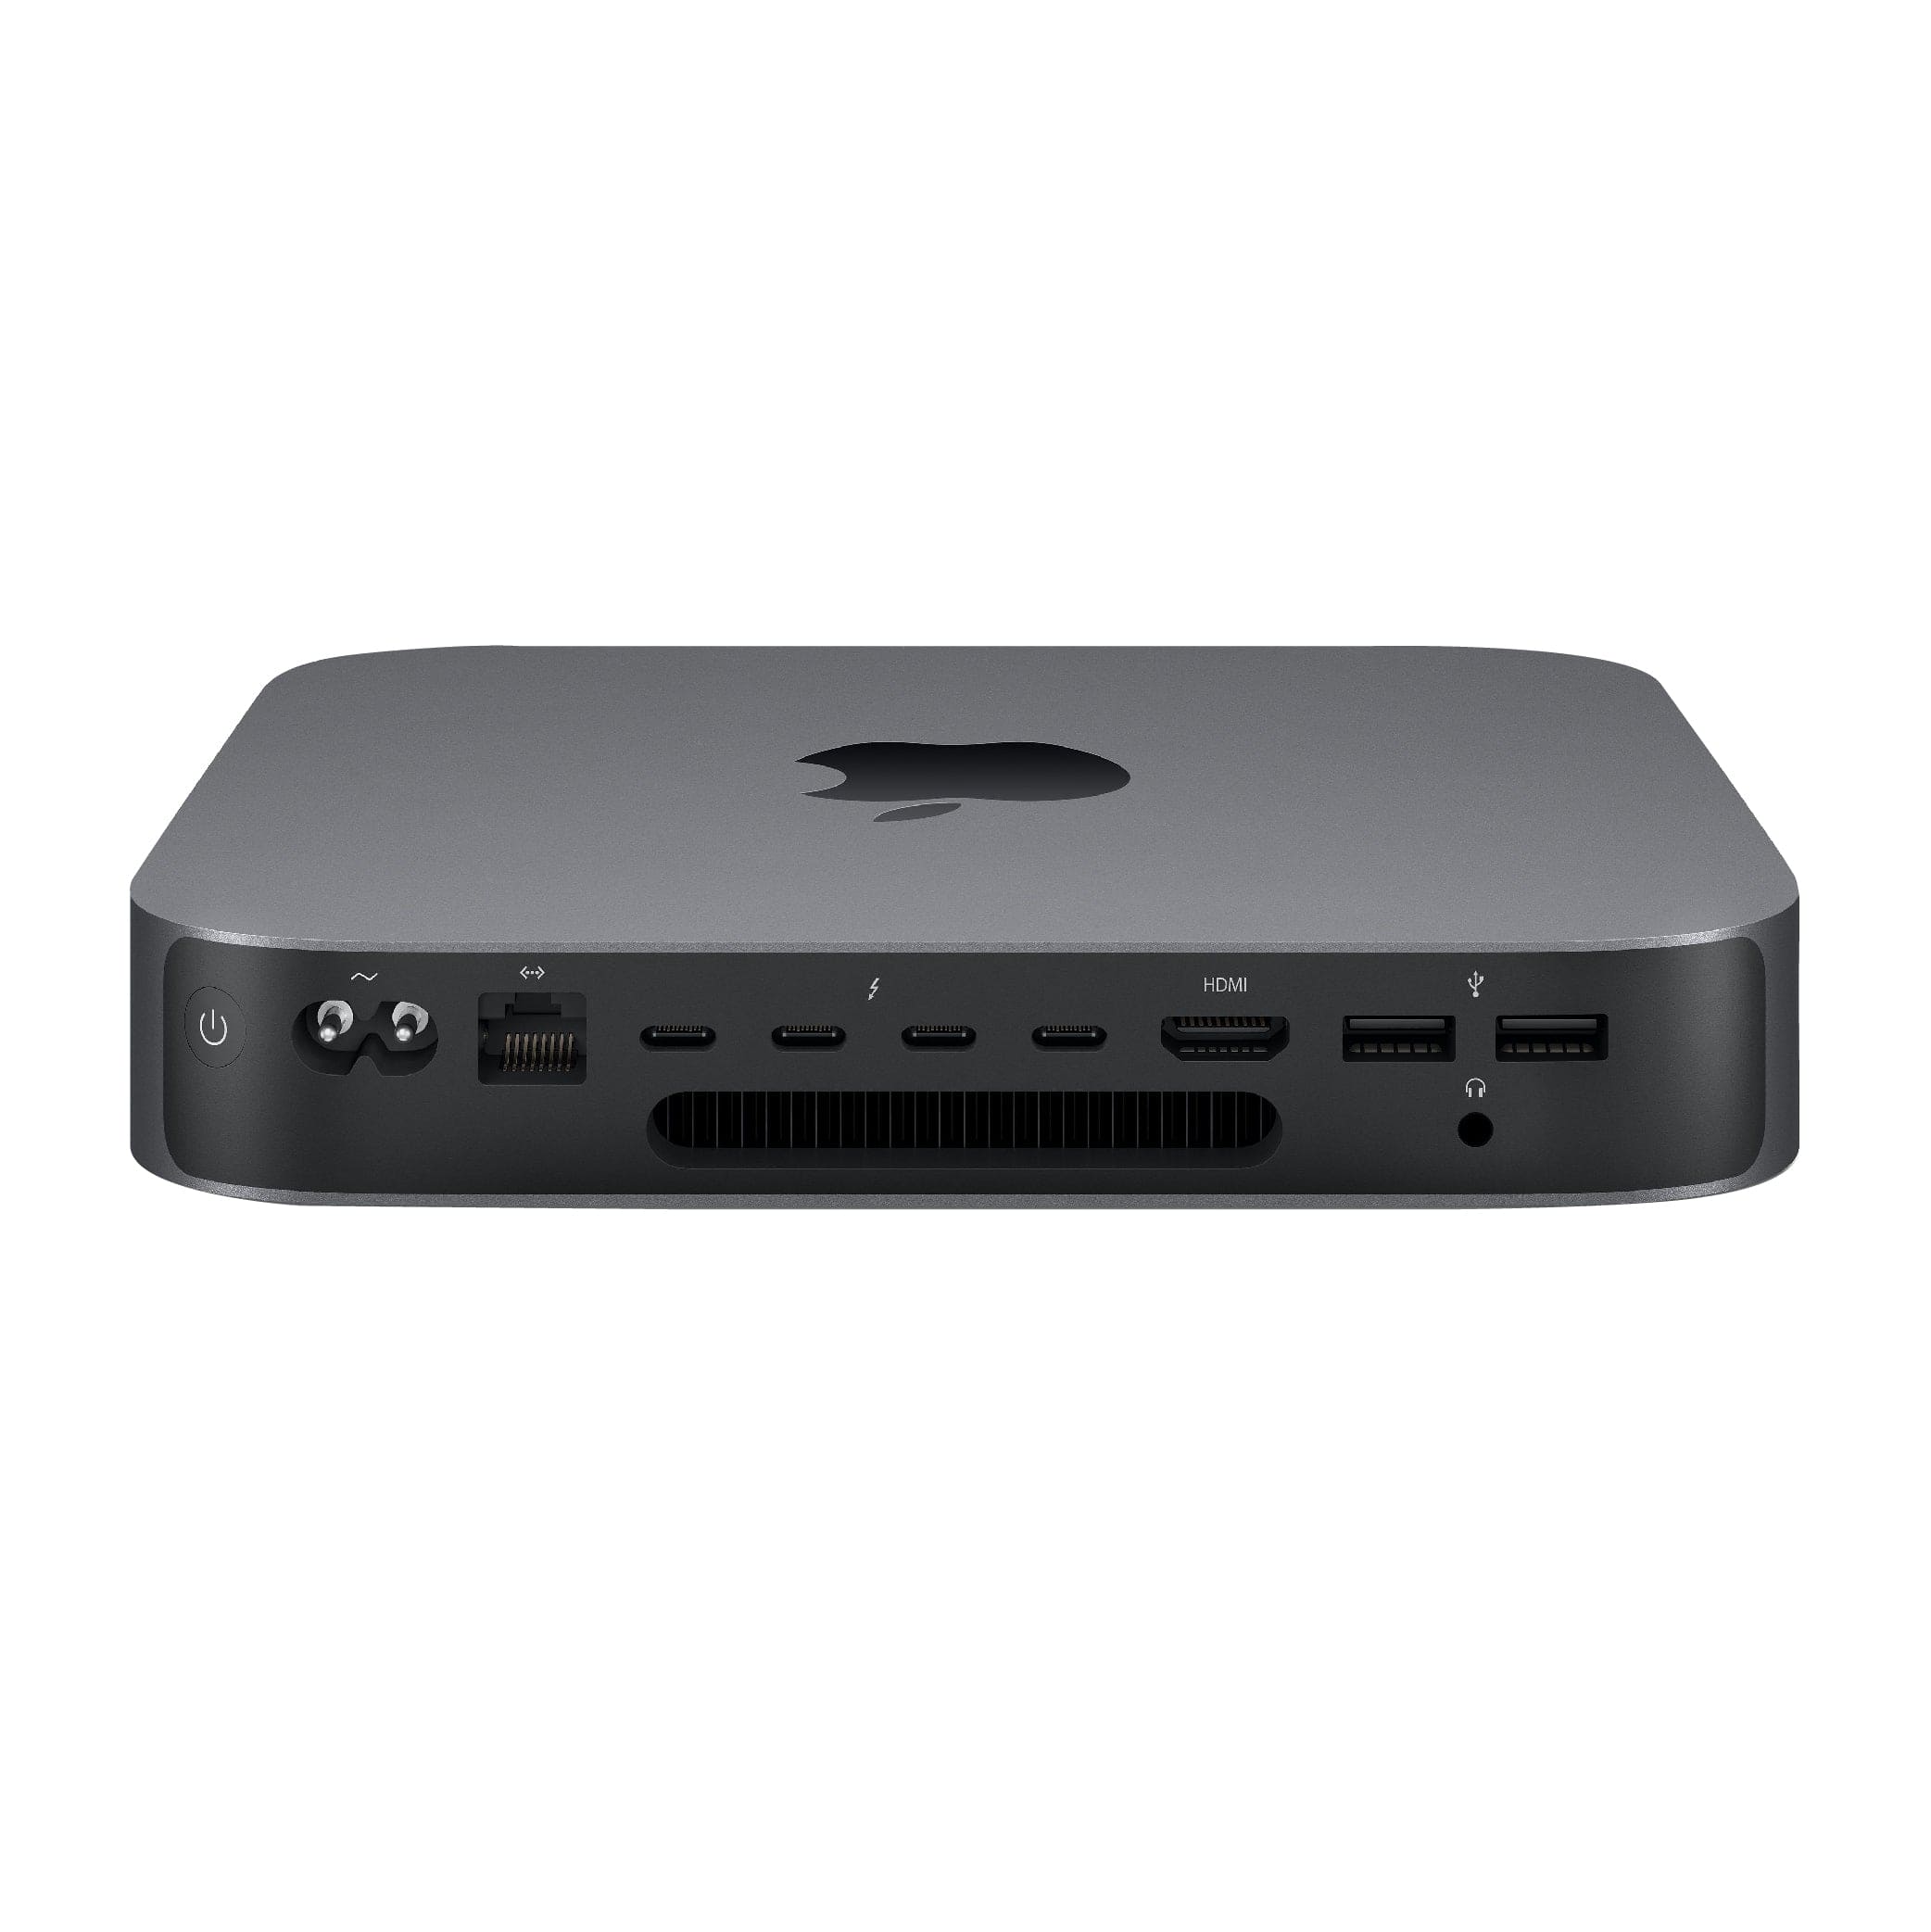 Apple - Mac mini Desktop MXNF2LL/A - Intel Core i3 - 8GB Memory - 256GB  Solid State Drive - Space Gray